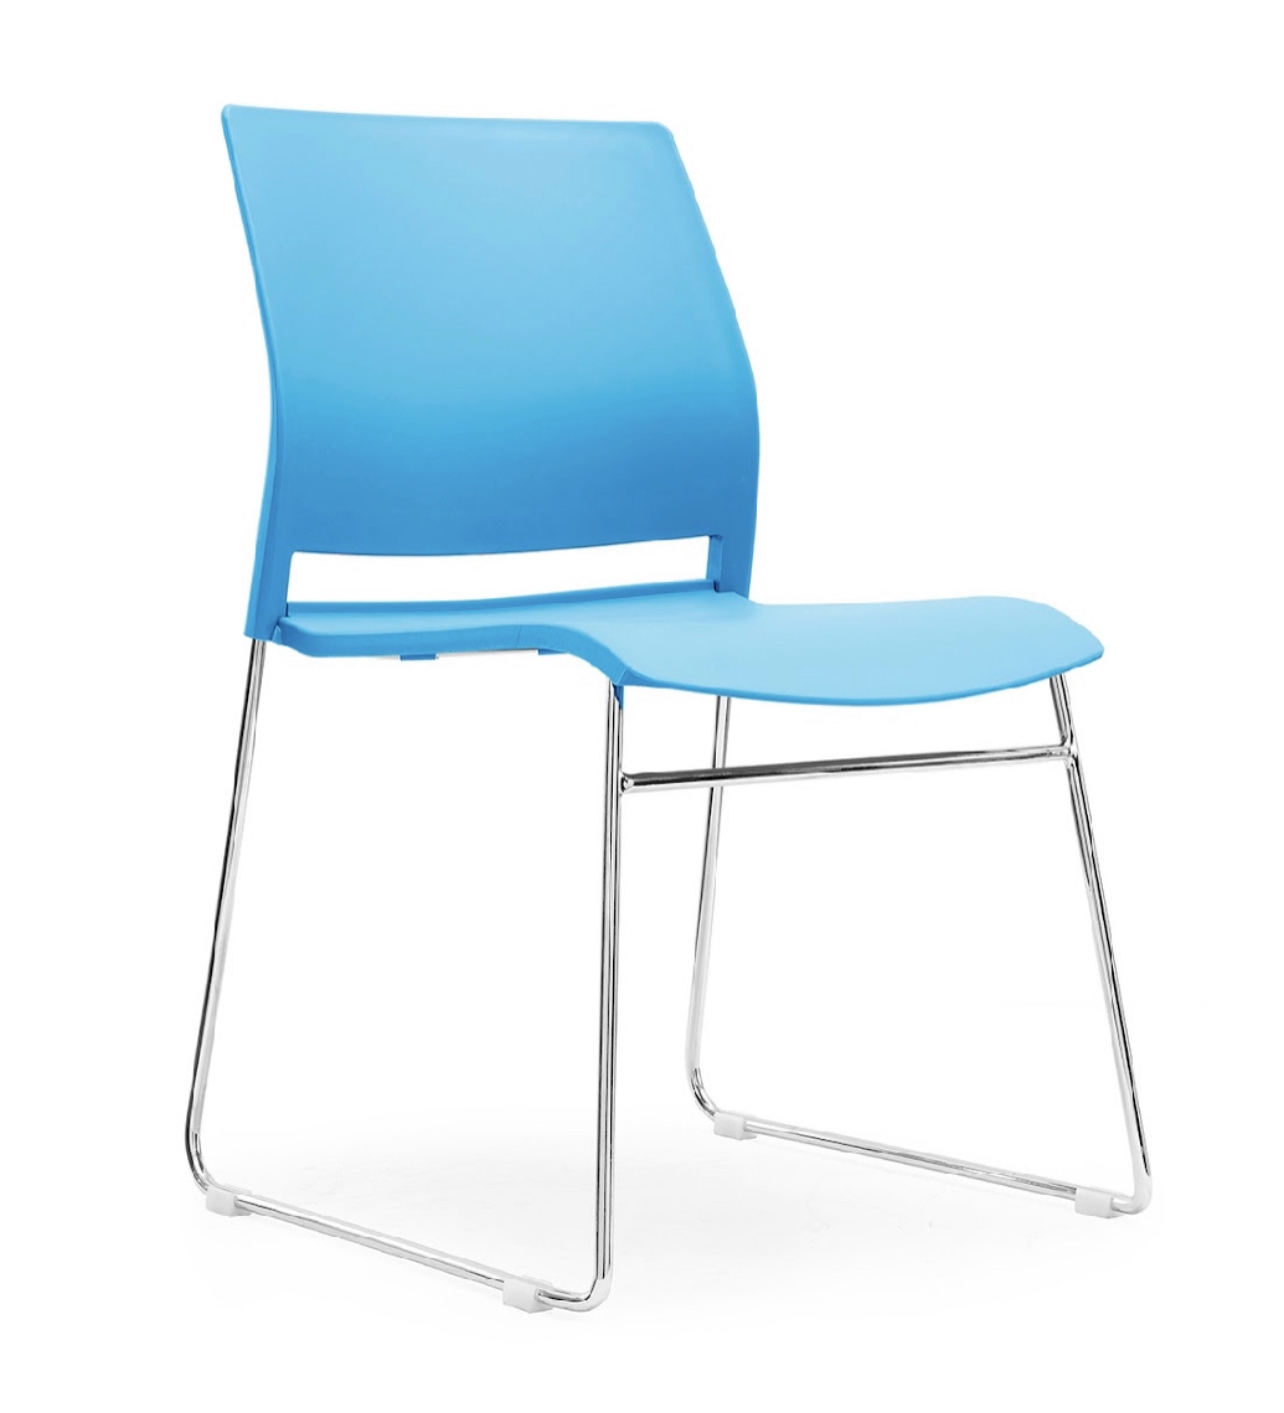 Designer stacking chair white , black or grey polypropylene   blue 